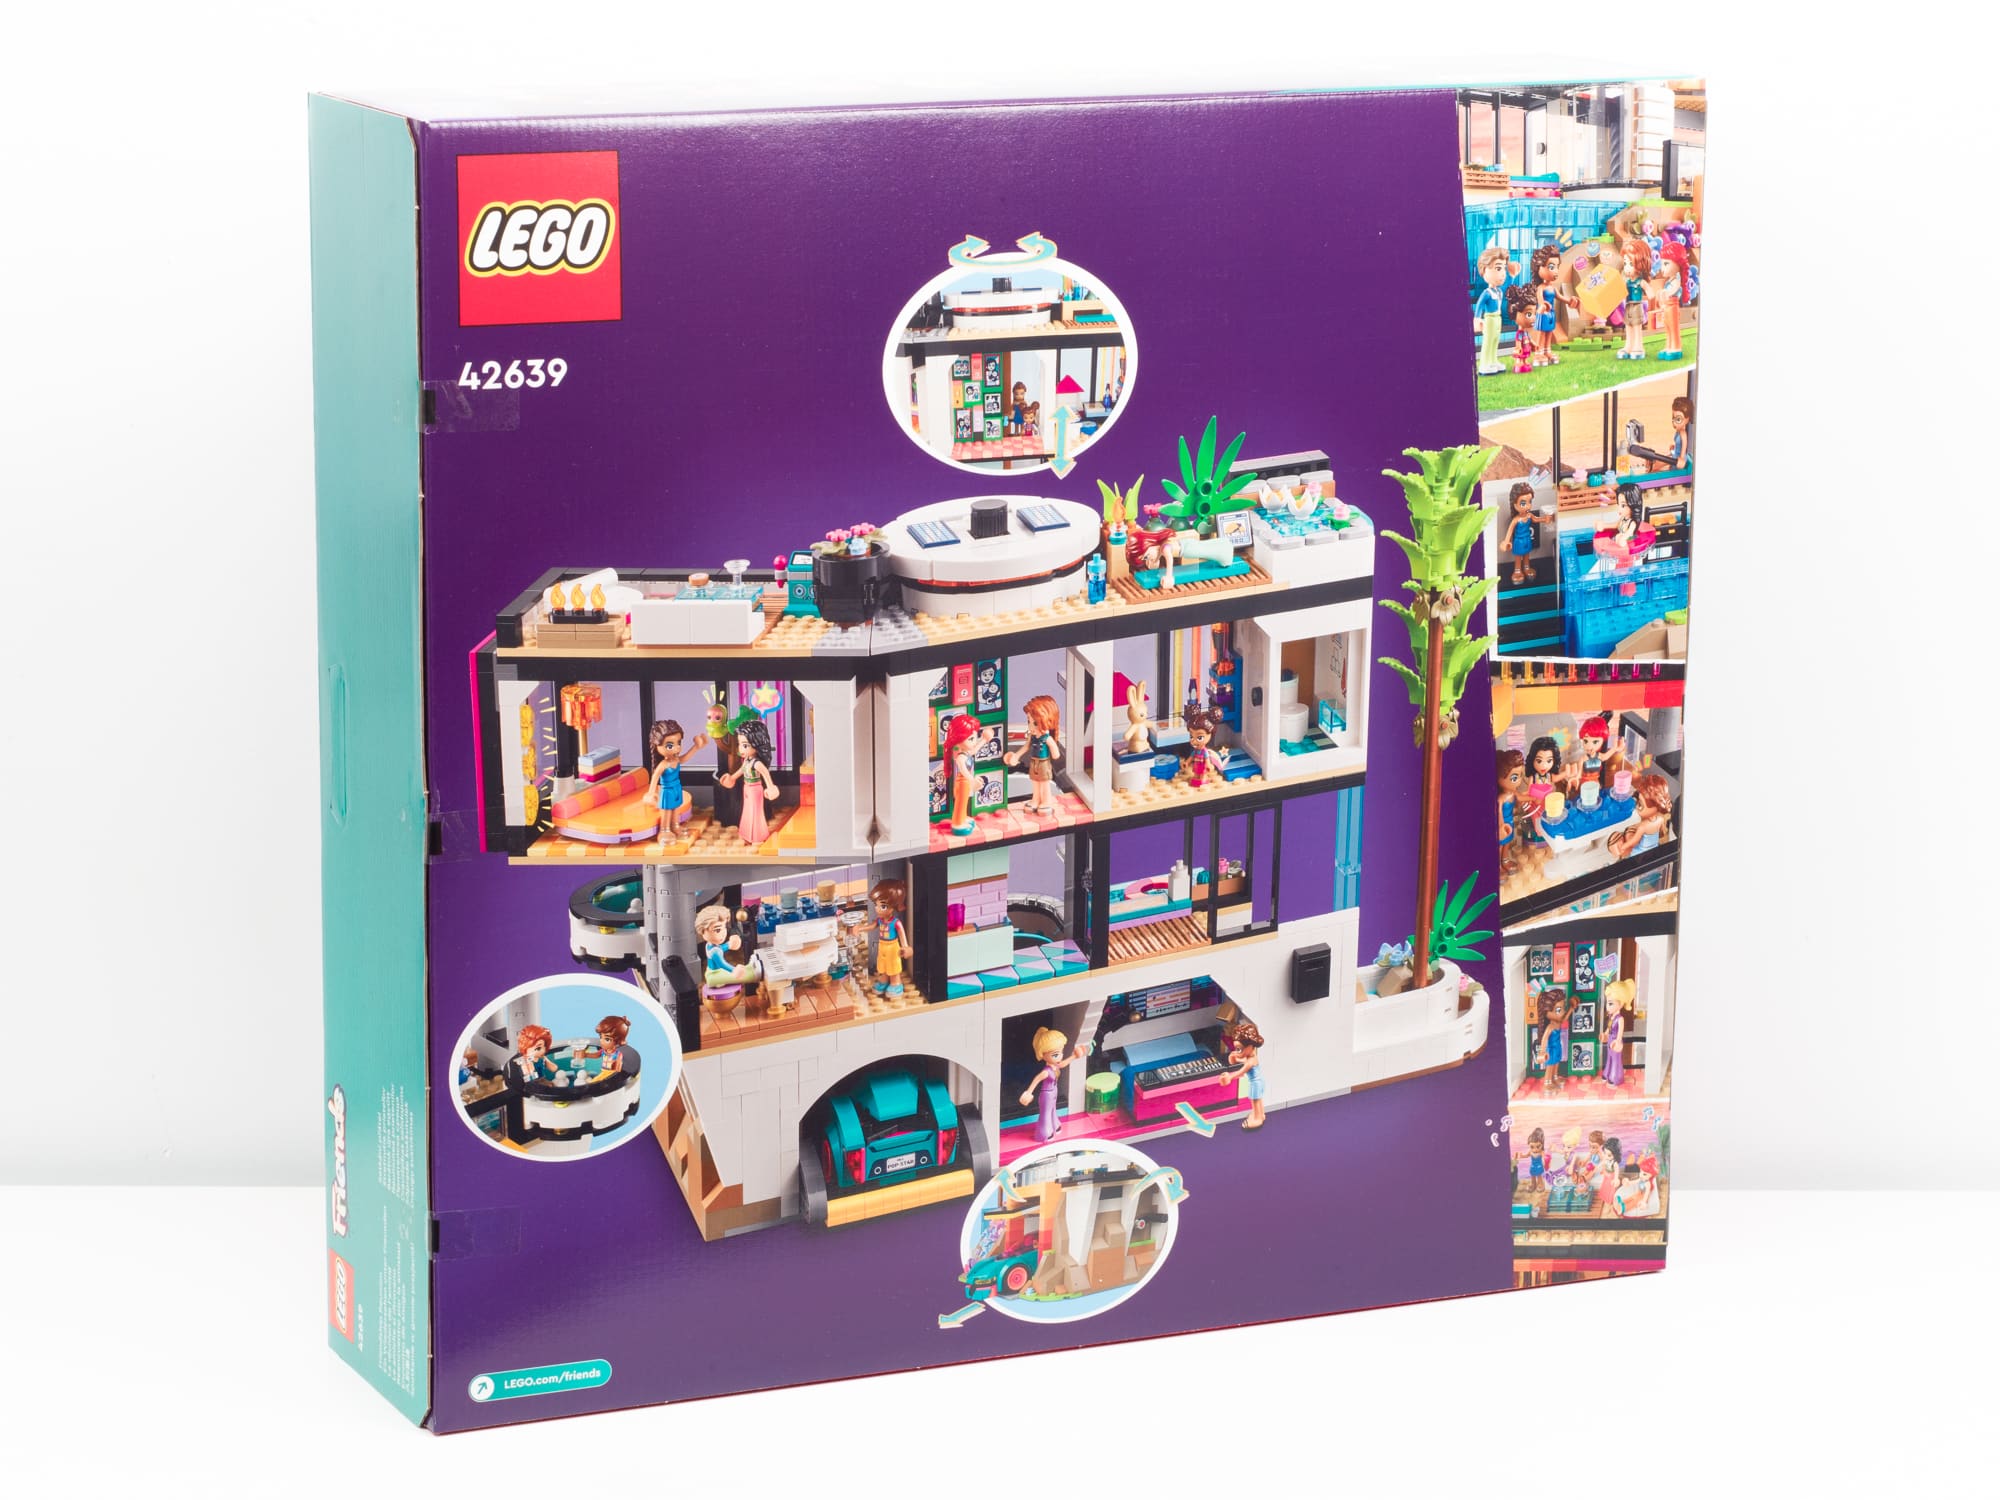 LEGO 42639 Andreas Moderne Villa Review 4